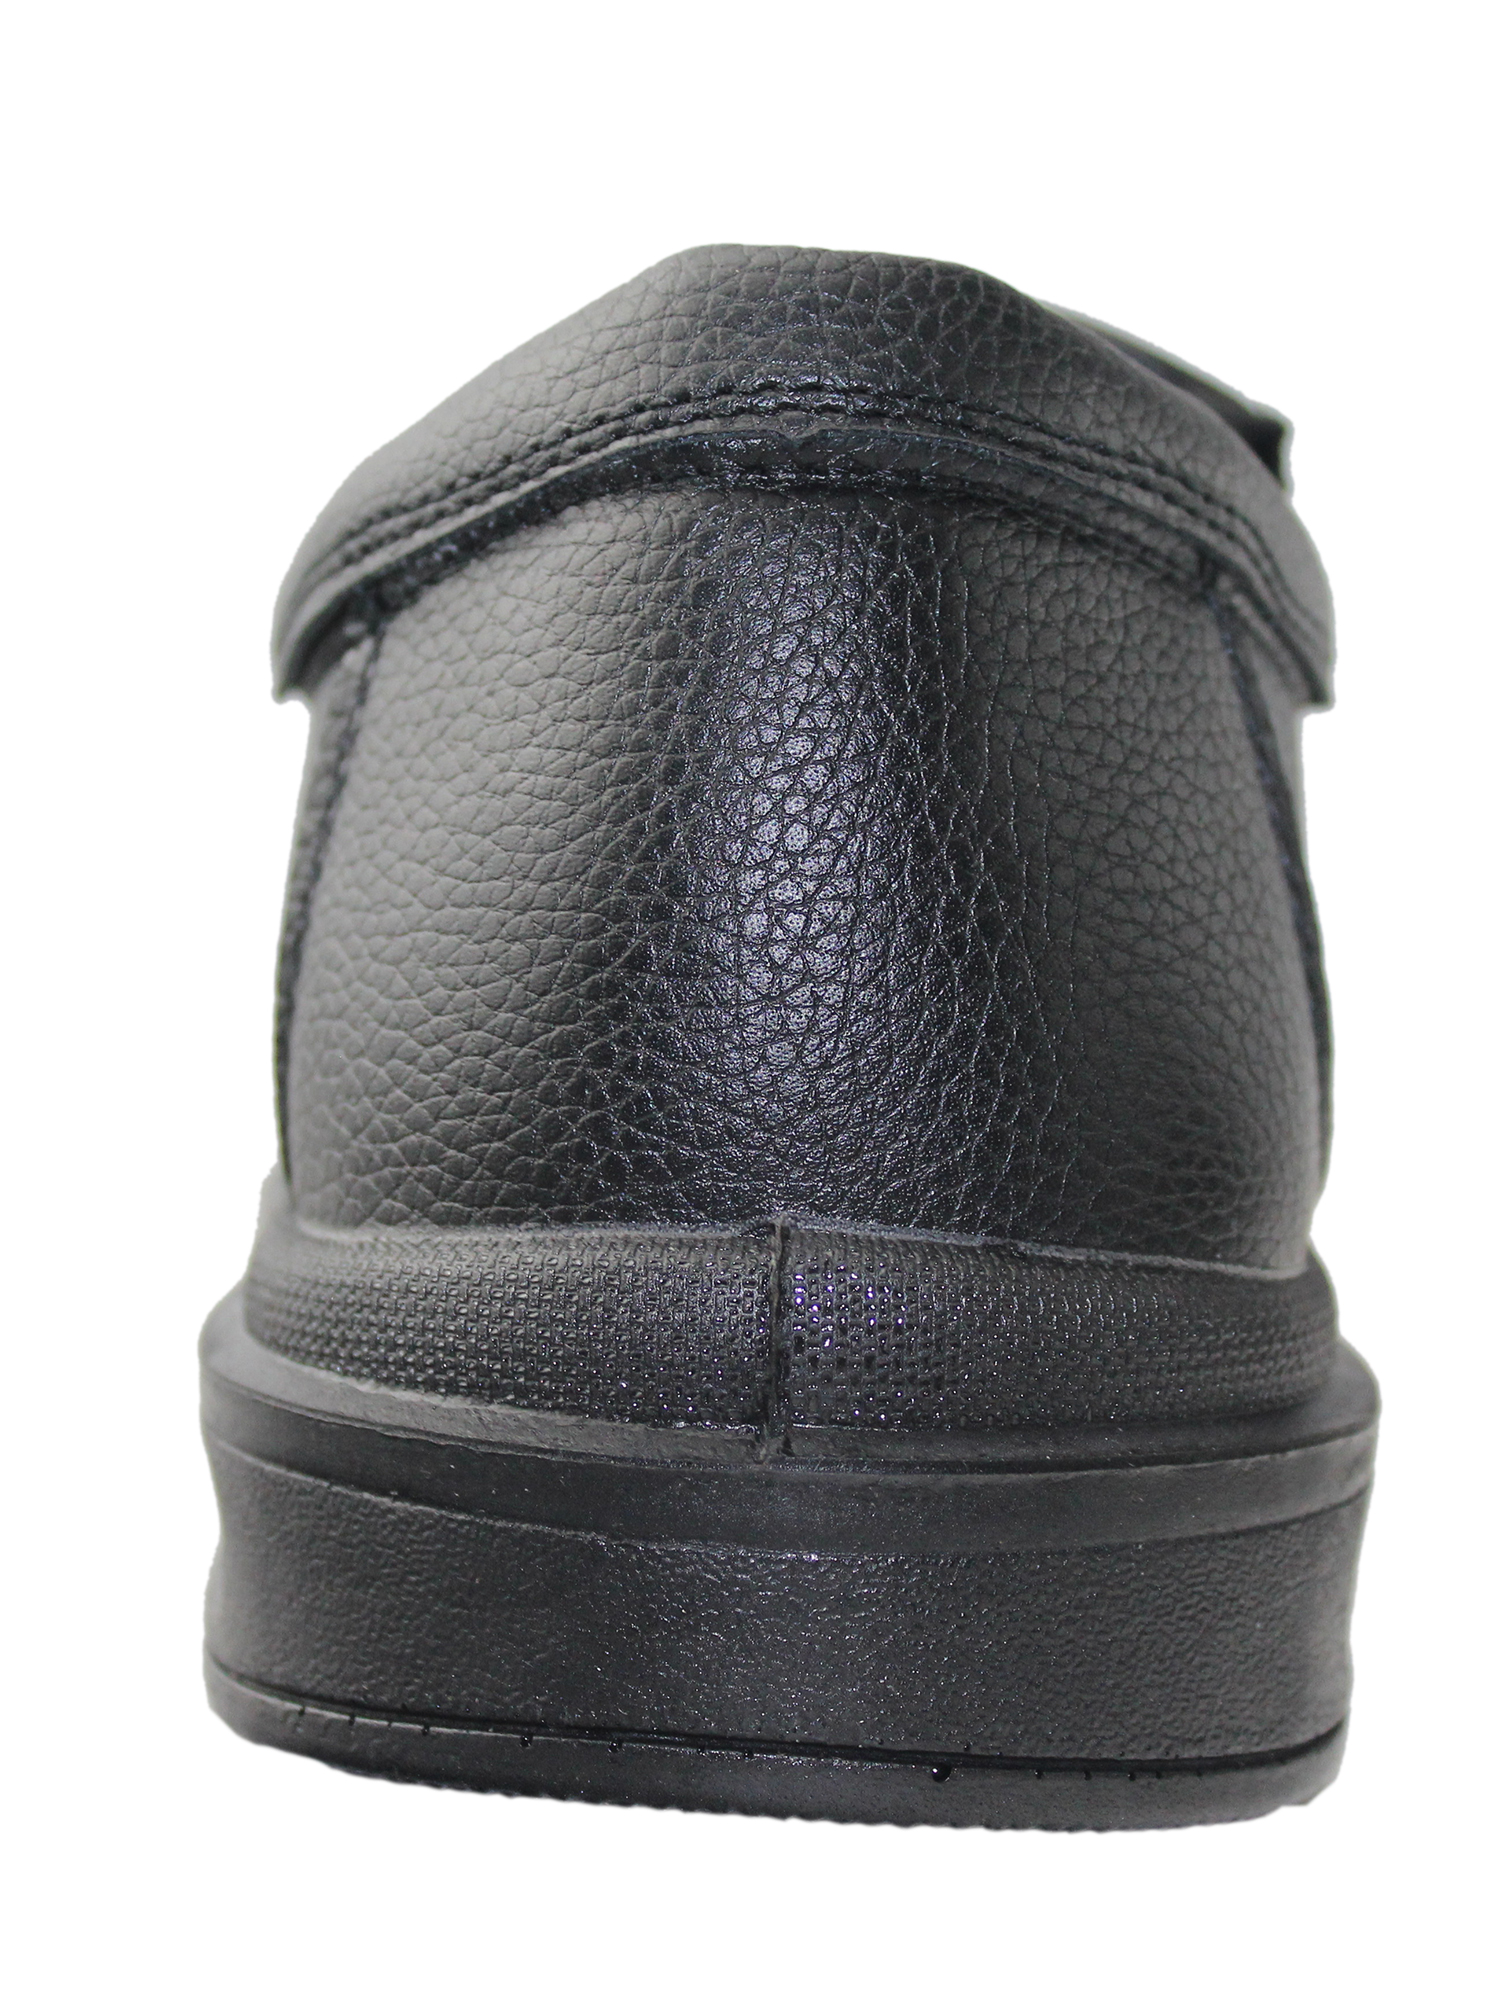 Tanleewa Men's Leather Work Shoes Anti-slip Waterproof Pull-on Casual Dress Shoe Size 10.5 - image 5 of 5